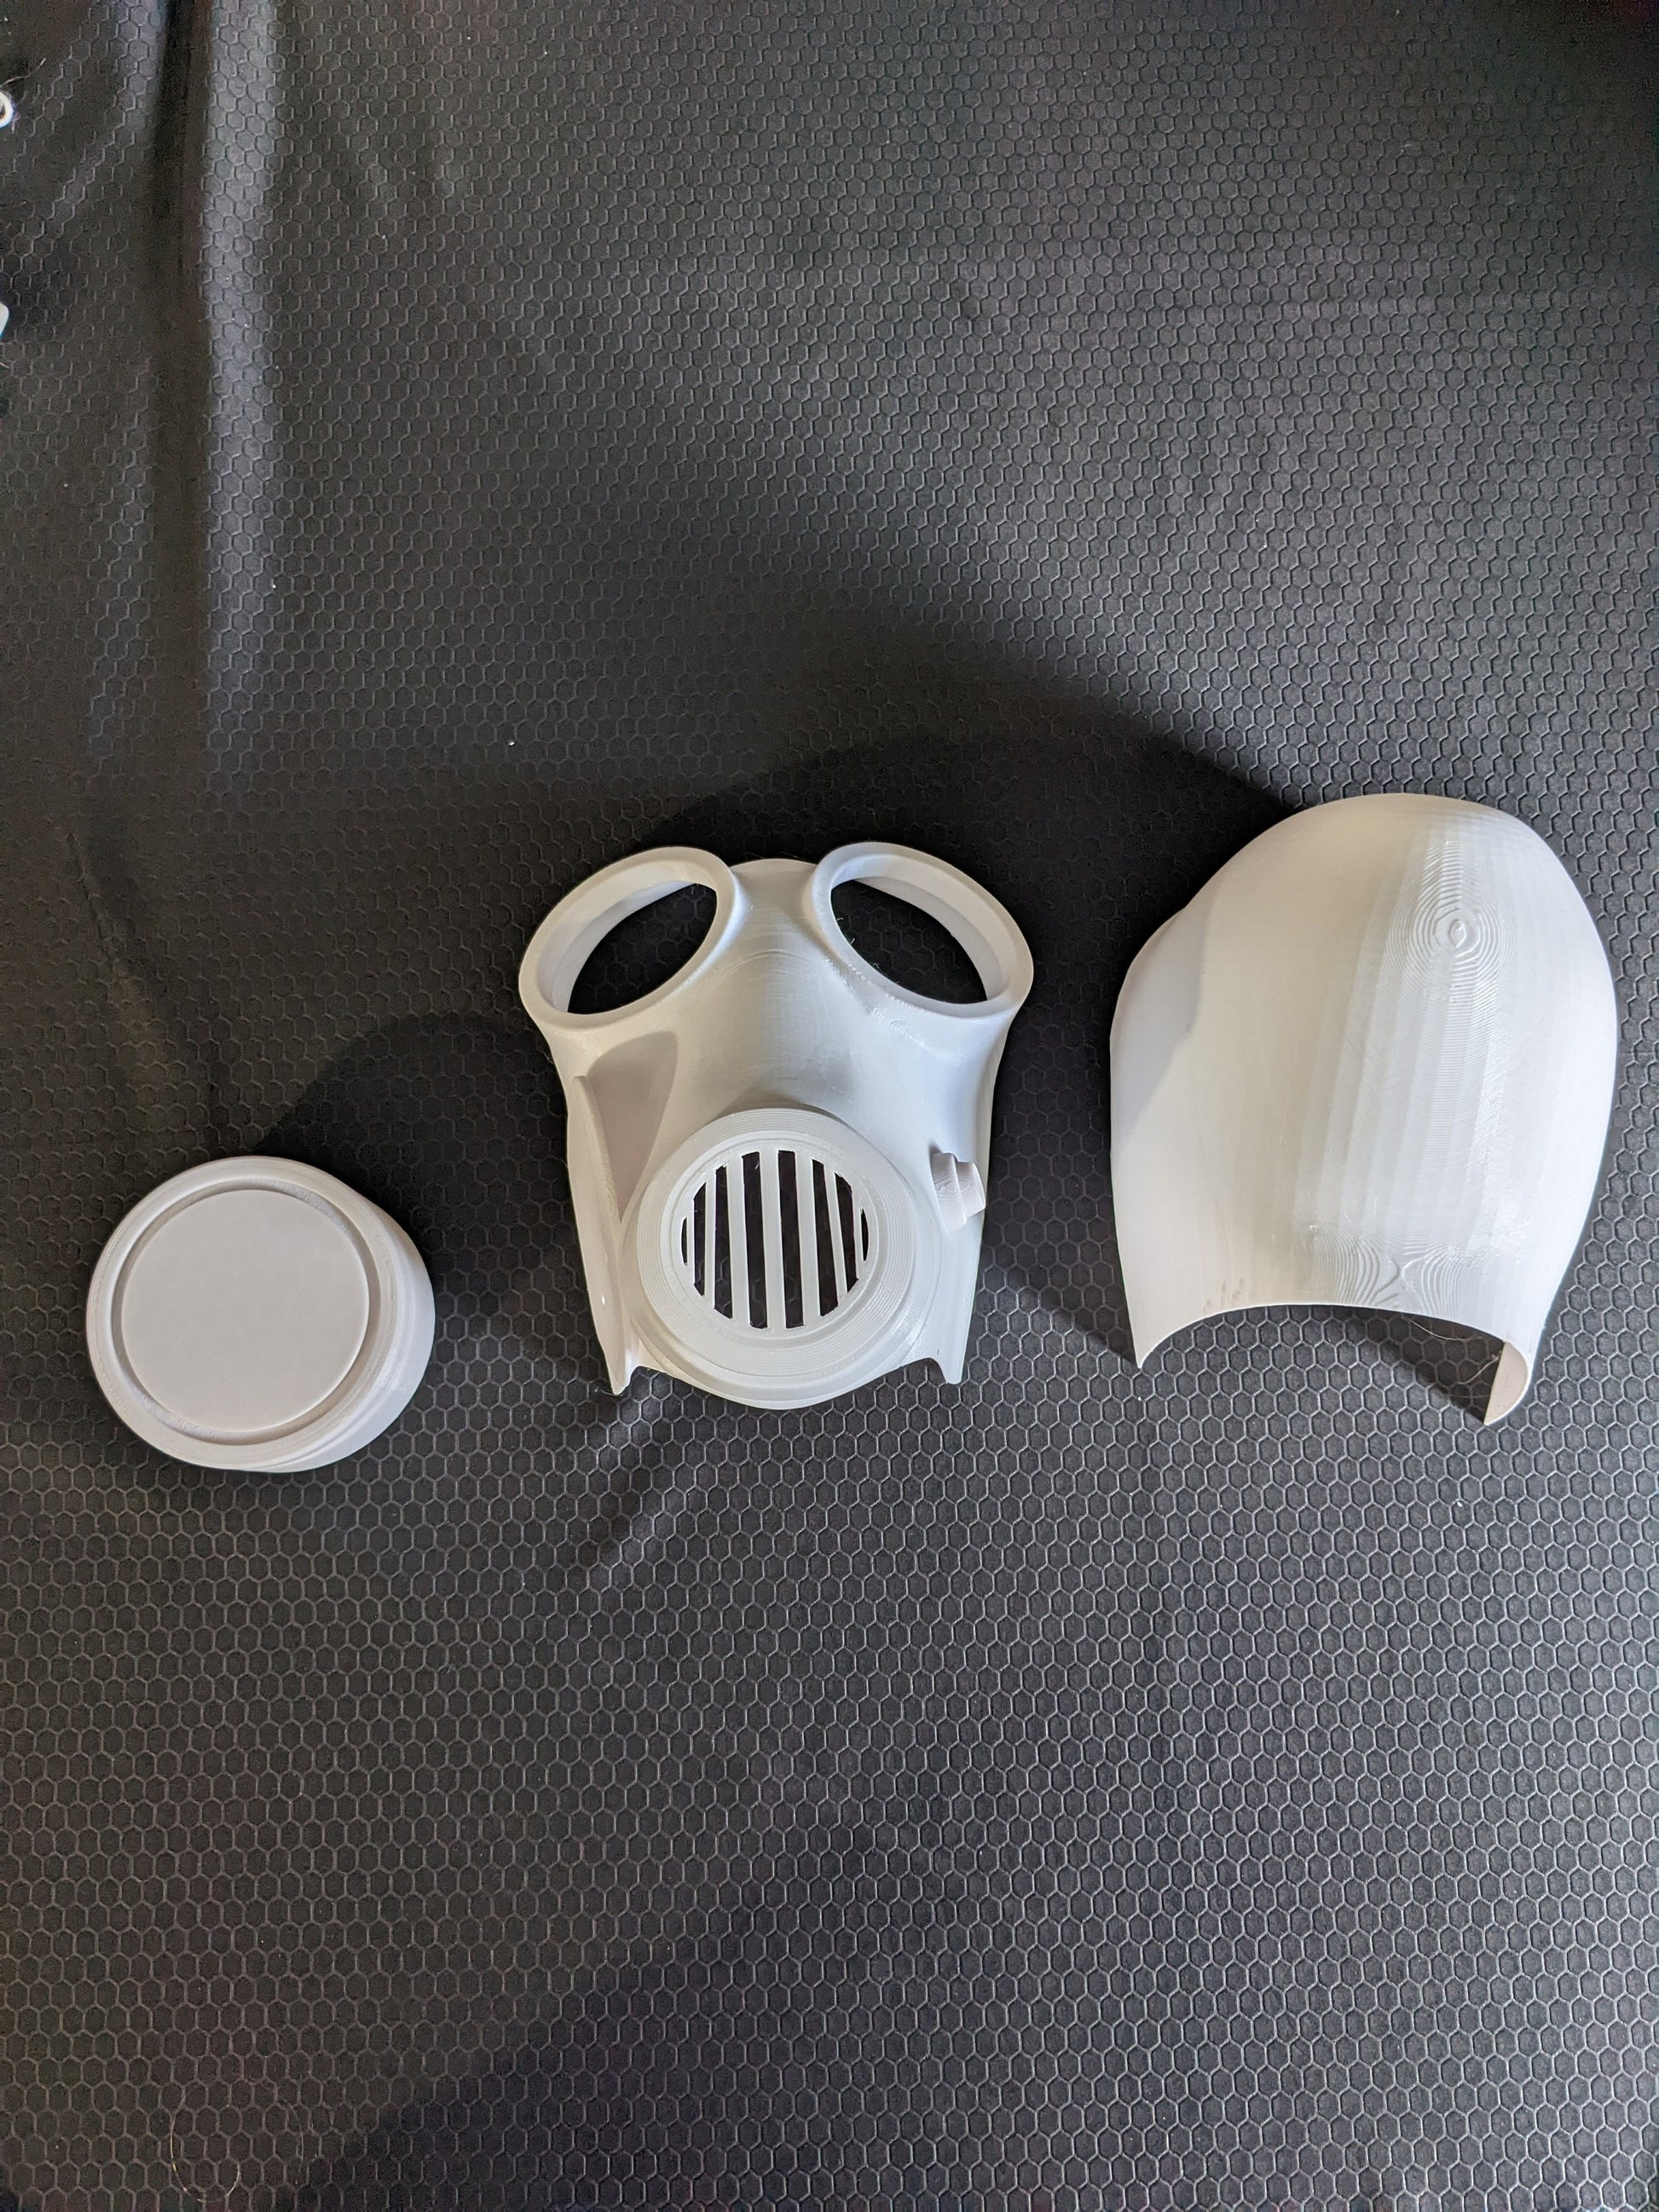 Pyro Mask Digital 3D Model  - Professionally Designed - Pyro Cosplay - TF2 Cosplay